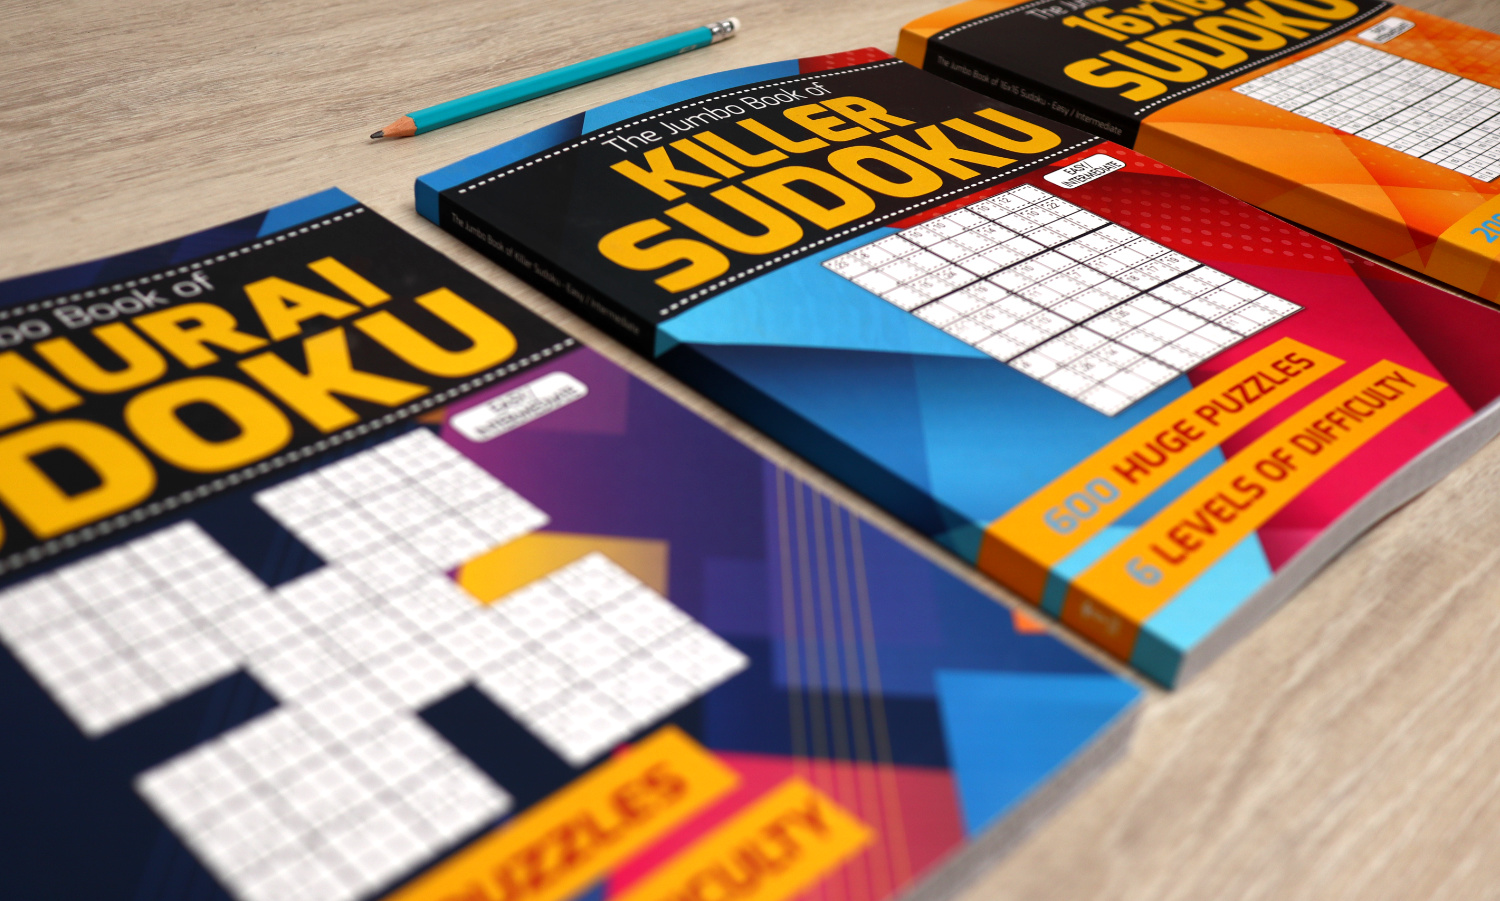 The Jumbo Book of Killer Sudoku — Intermediate to Hard - Puzzle Genius